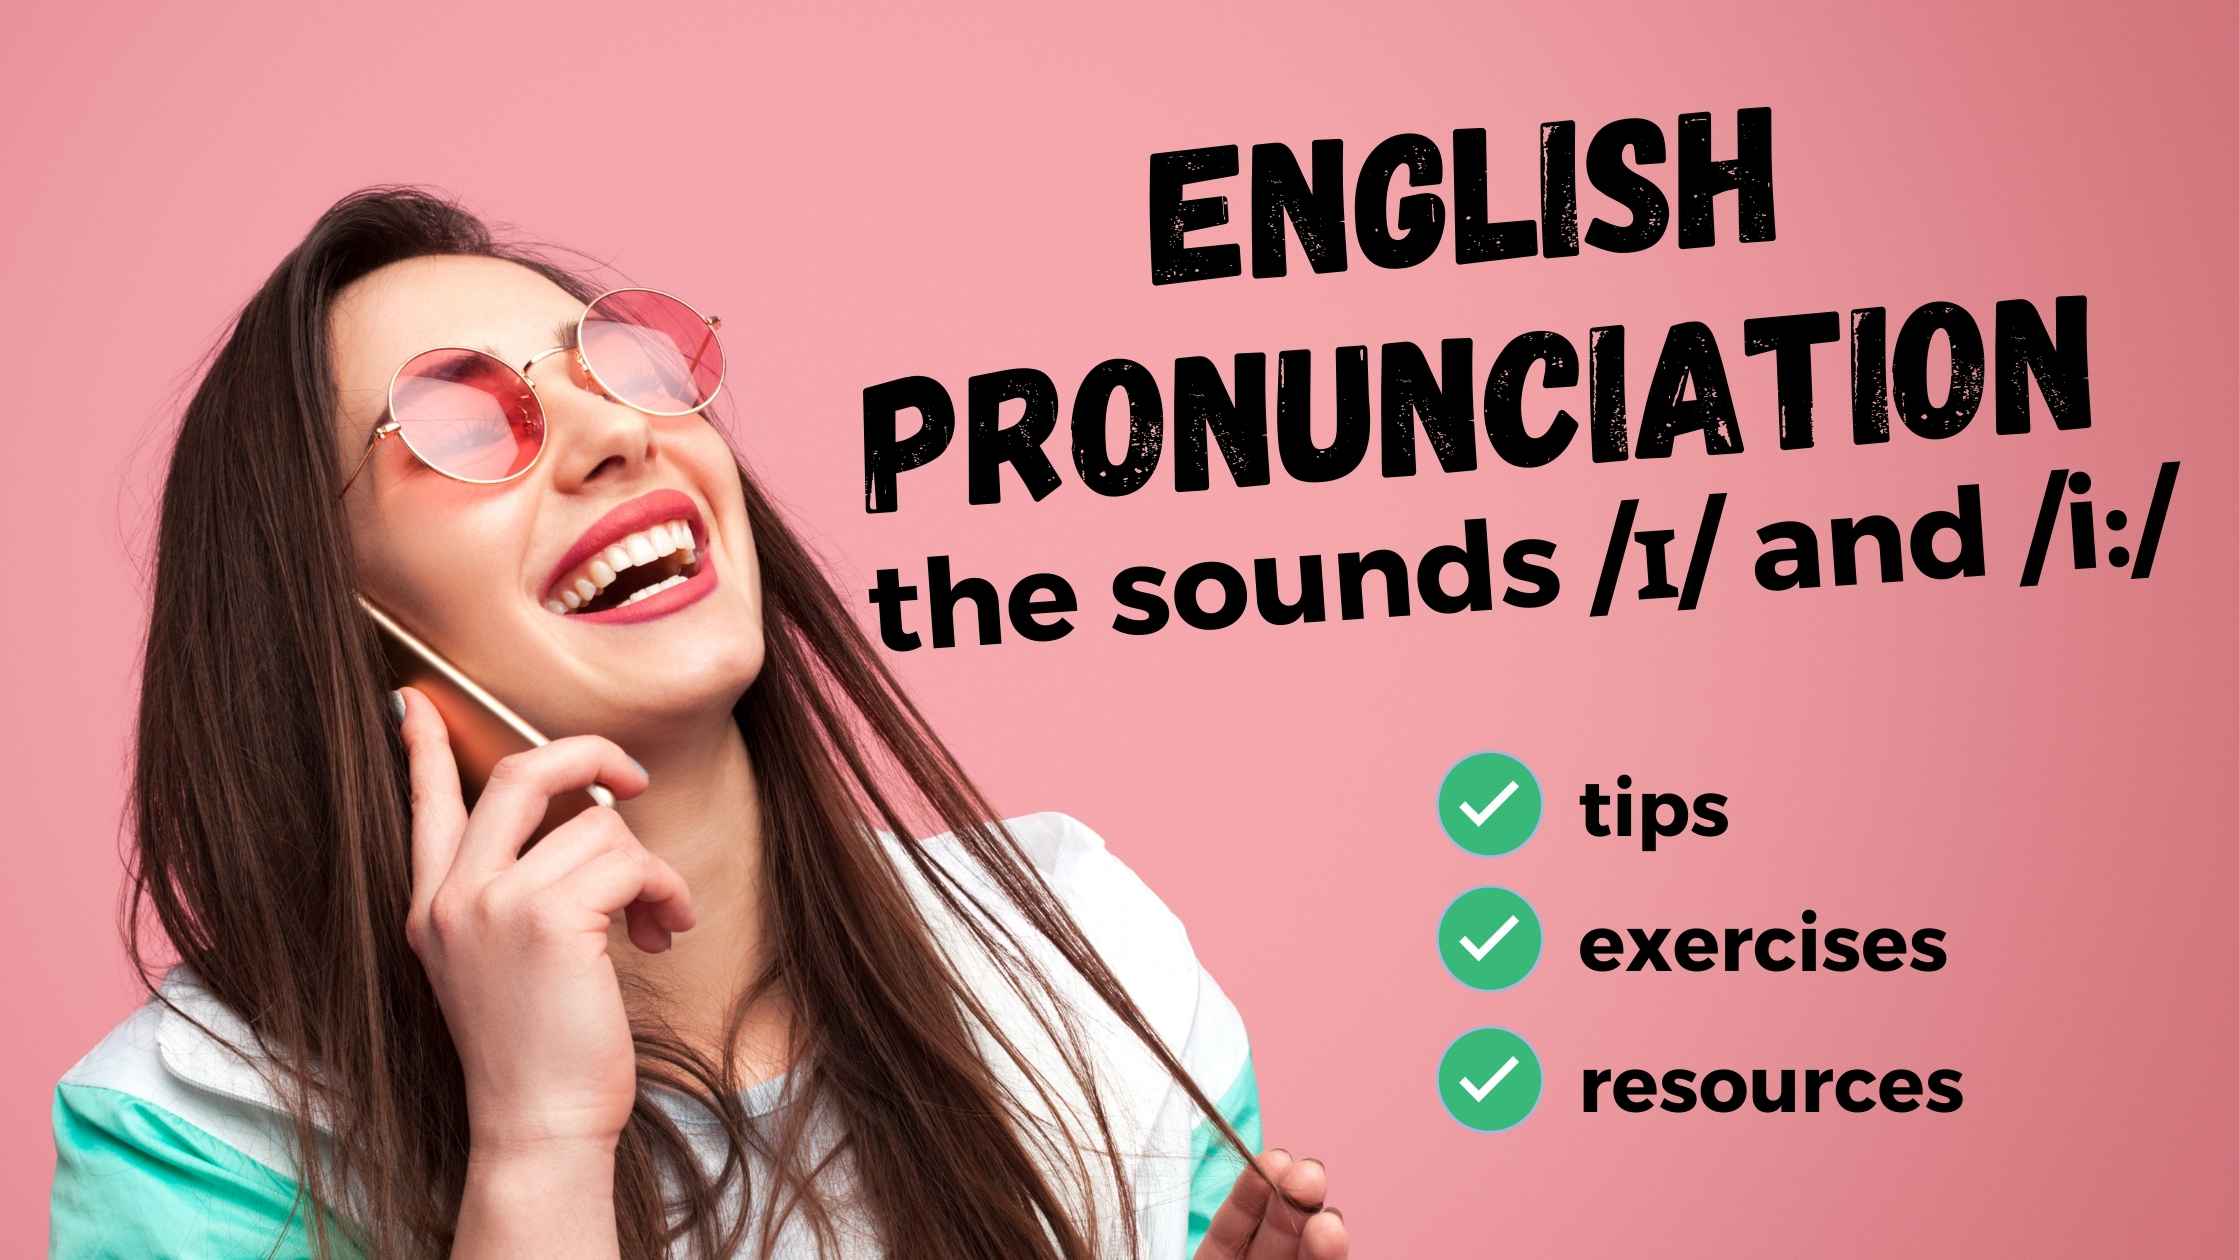 How To Pronounce Kicked - Pronunciation Academy 